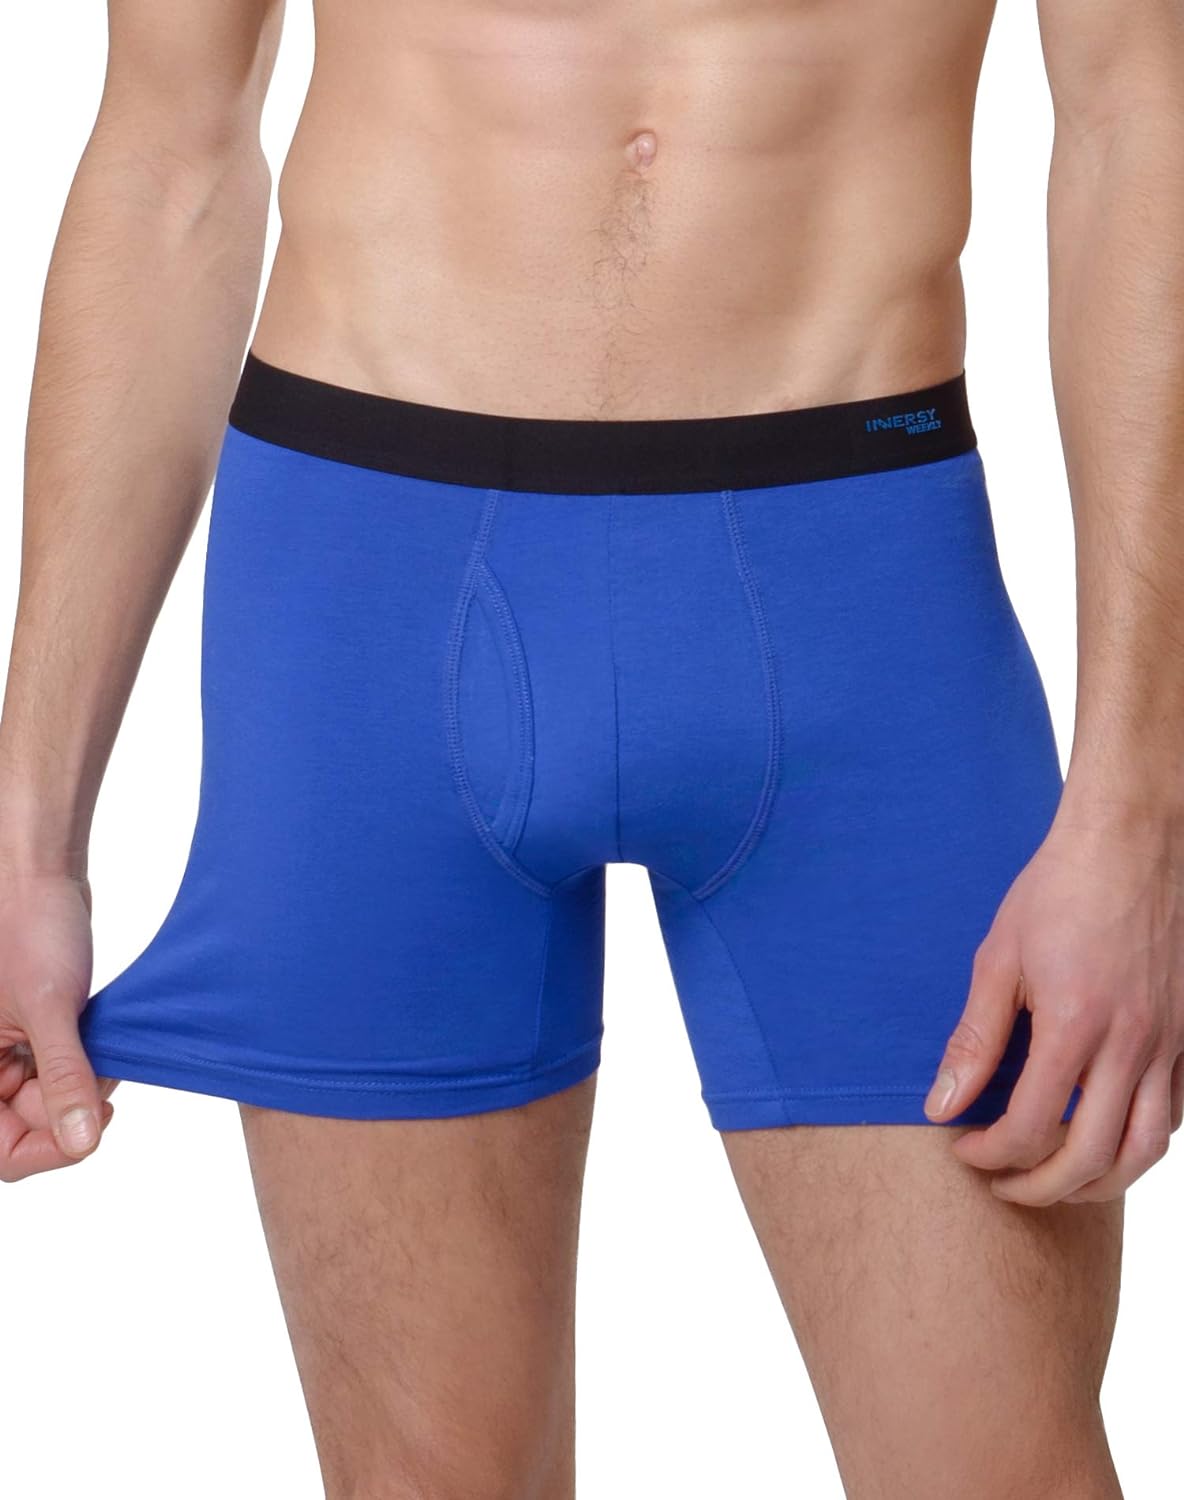 MEANIT Mens Boxer Briefs Underwear Comfortable Cotton Breathable Tagless Short Leg Boxers Brief for Men Boys 8 Pack 